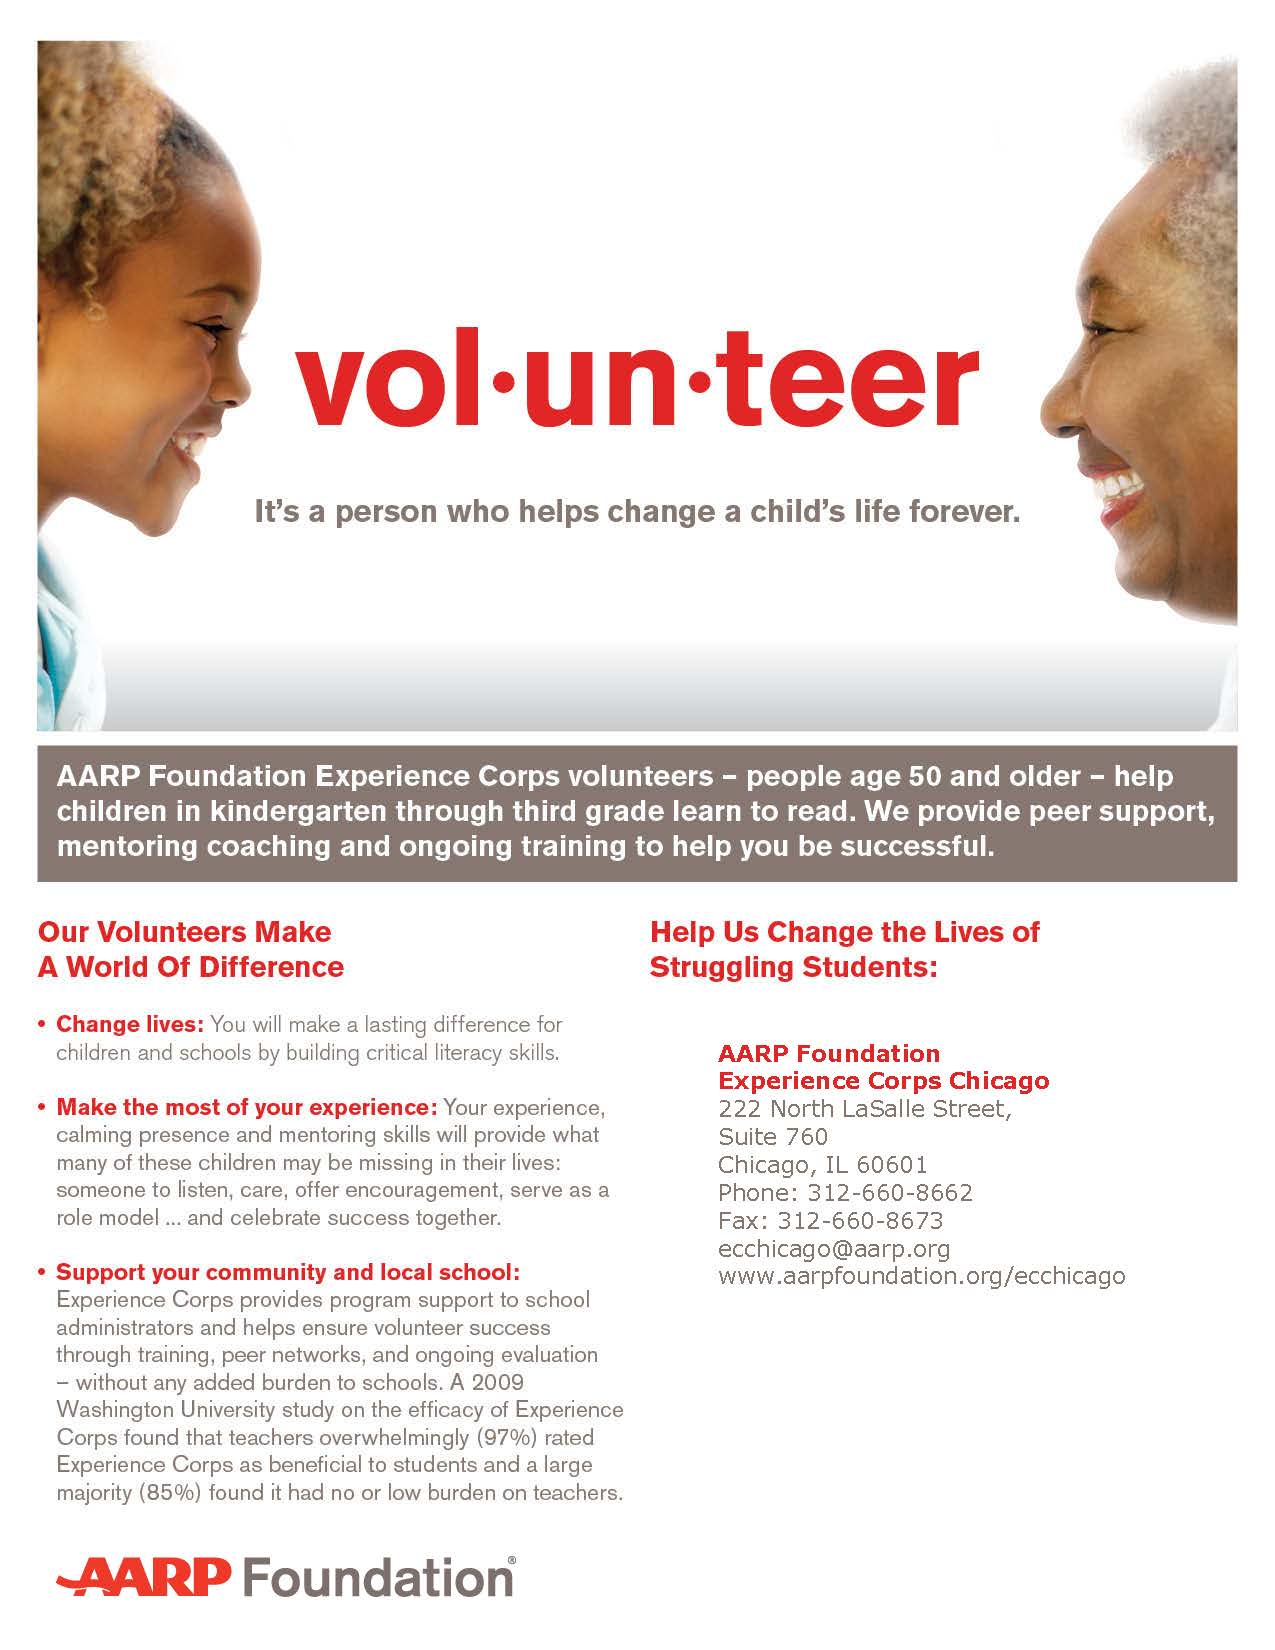 AARP Volunteering